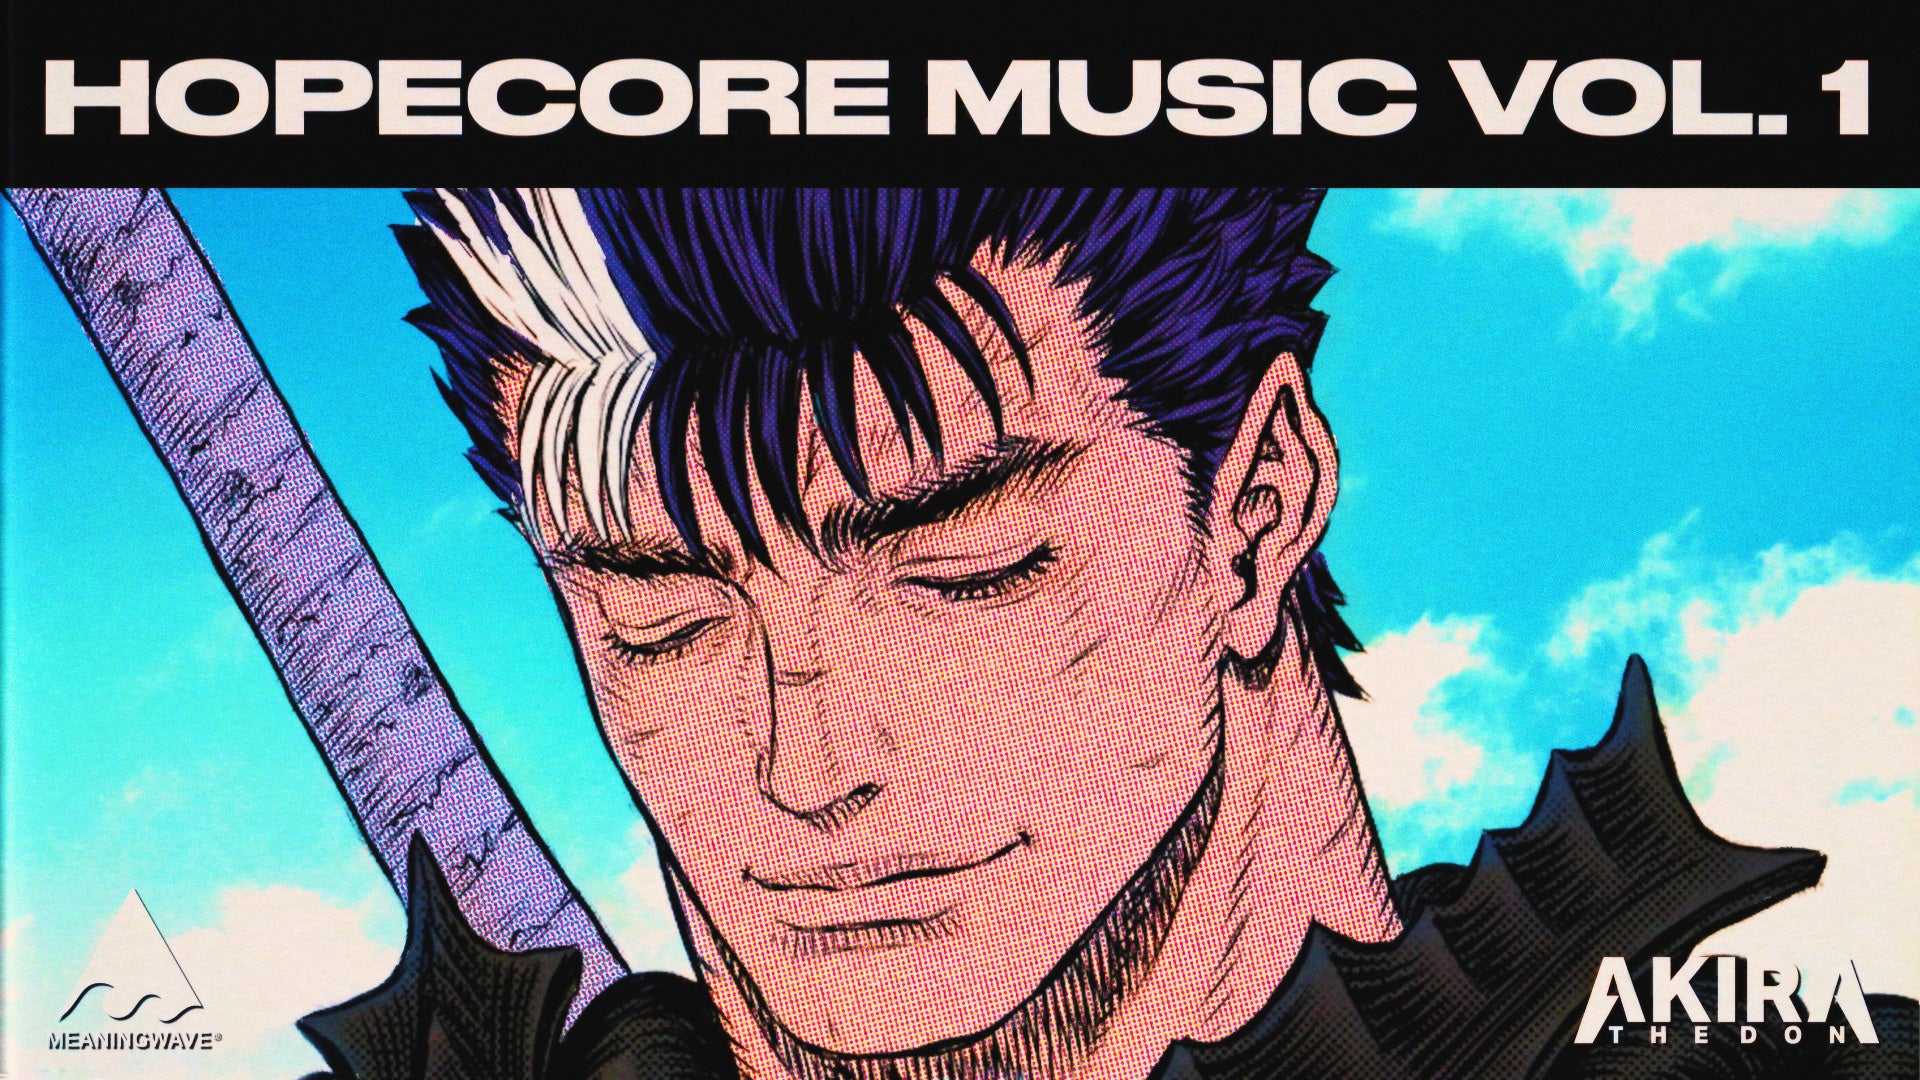 Akira The Don - HOPECORE MUSIC VOL. 1  | A Meaningwave Mixtape